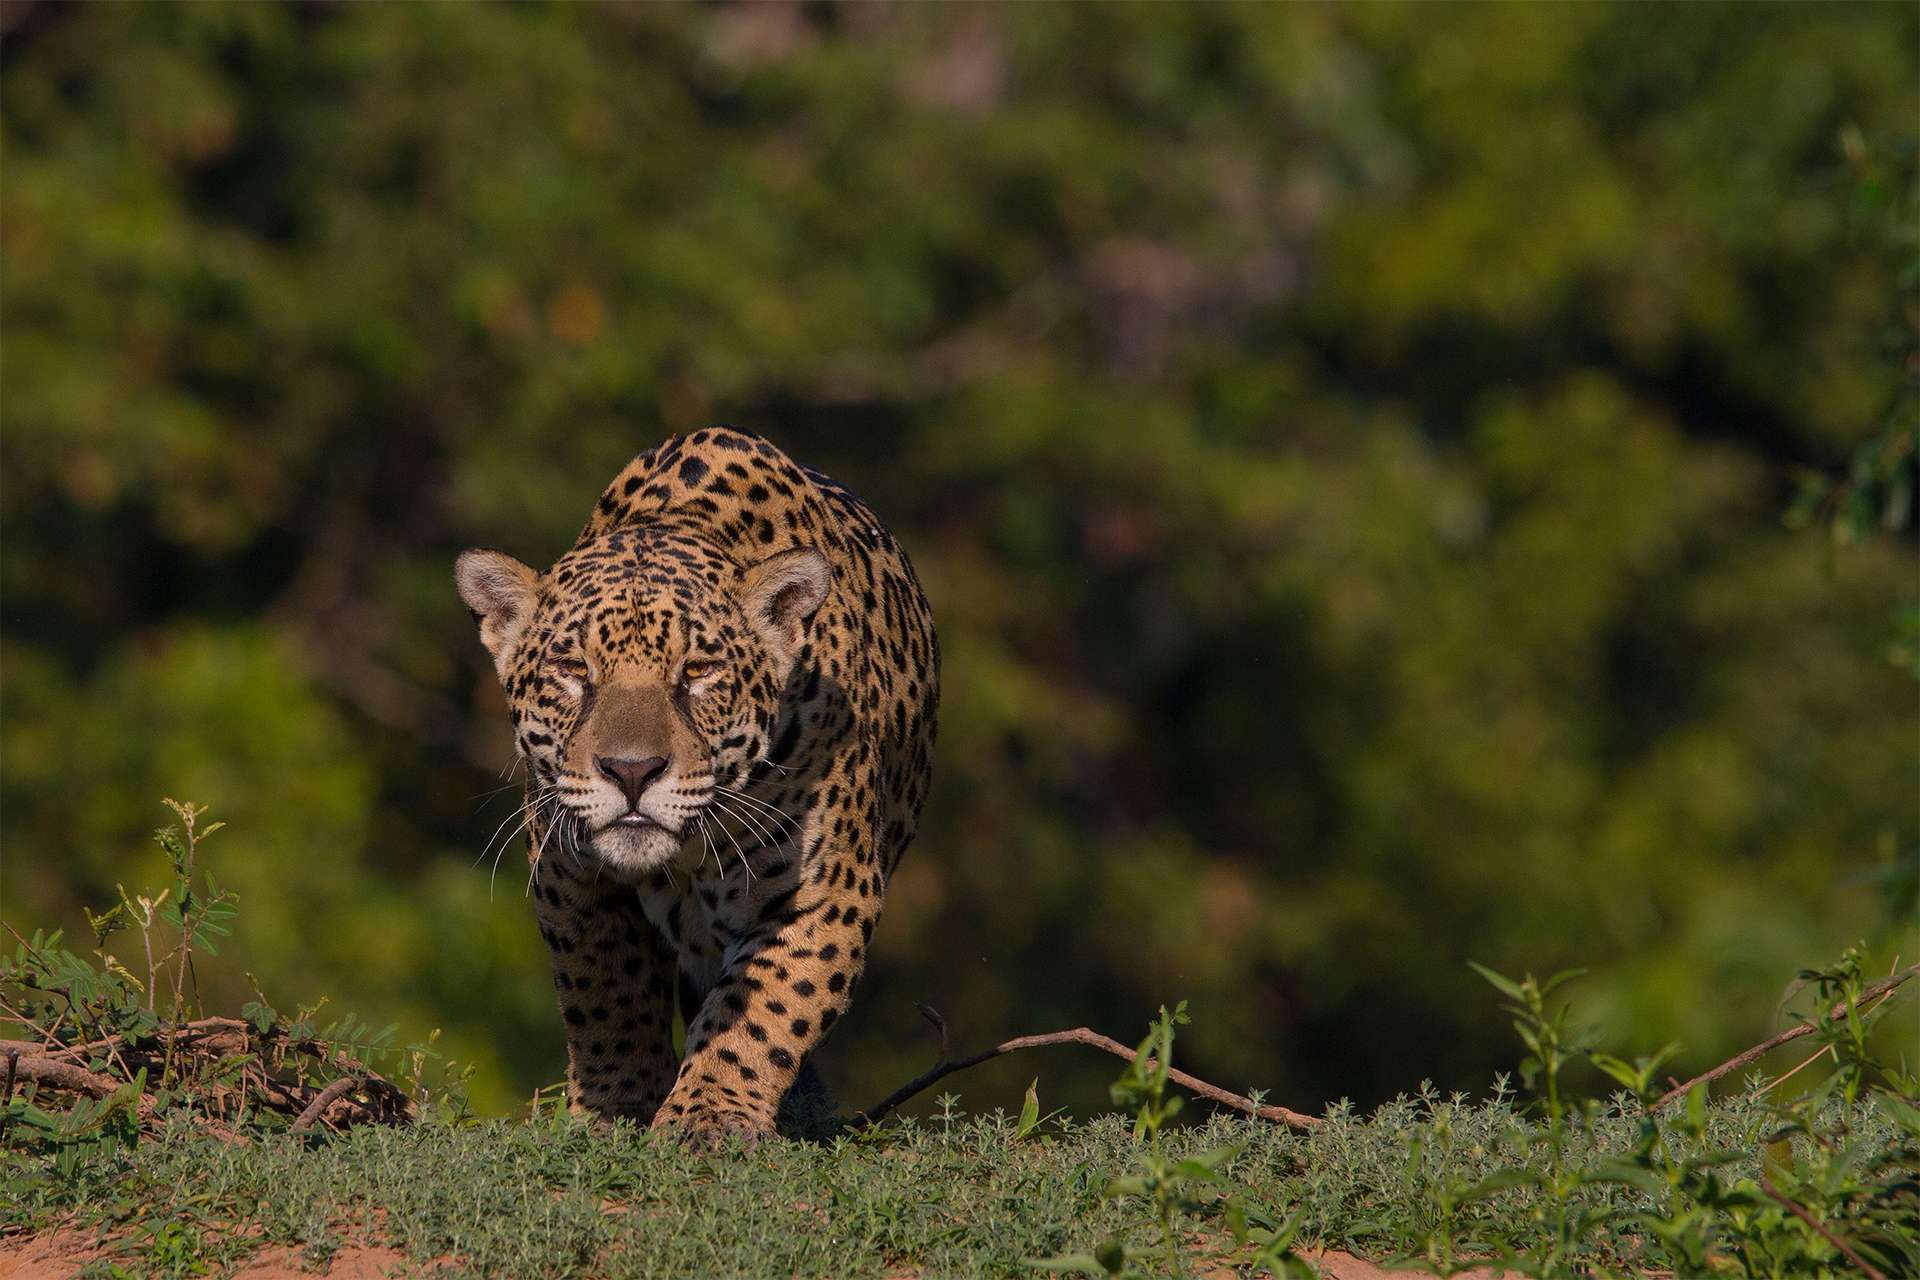 Jaguar in Brazil Pantanal on the prowl 